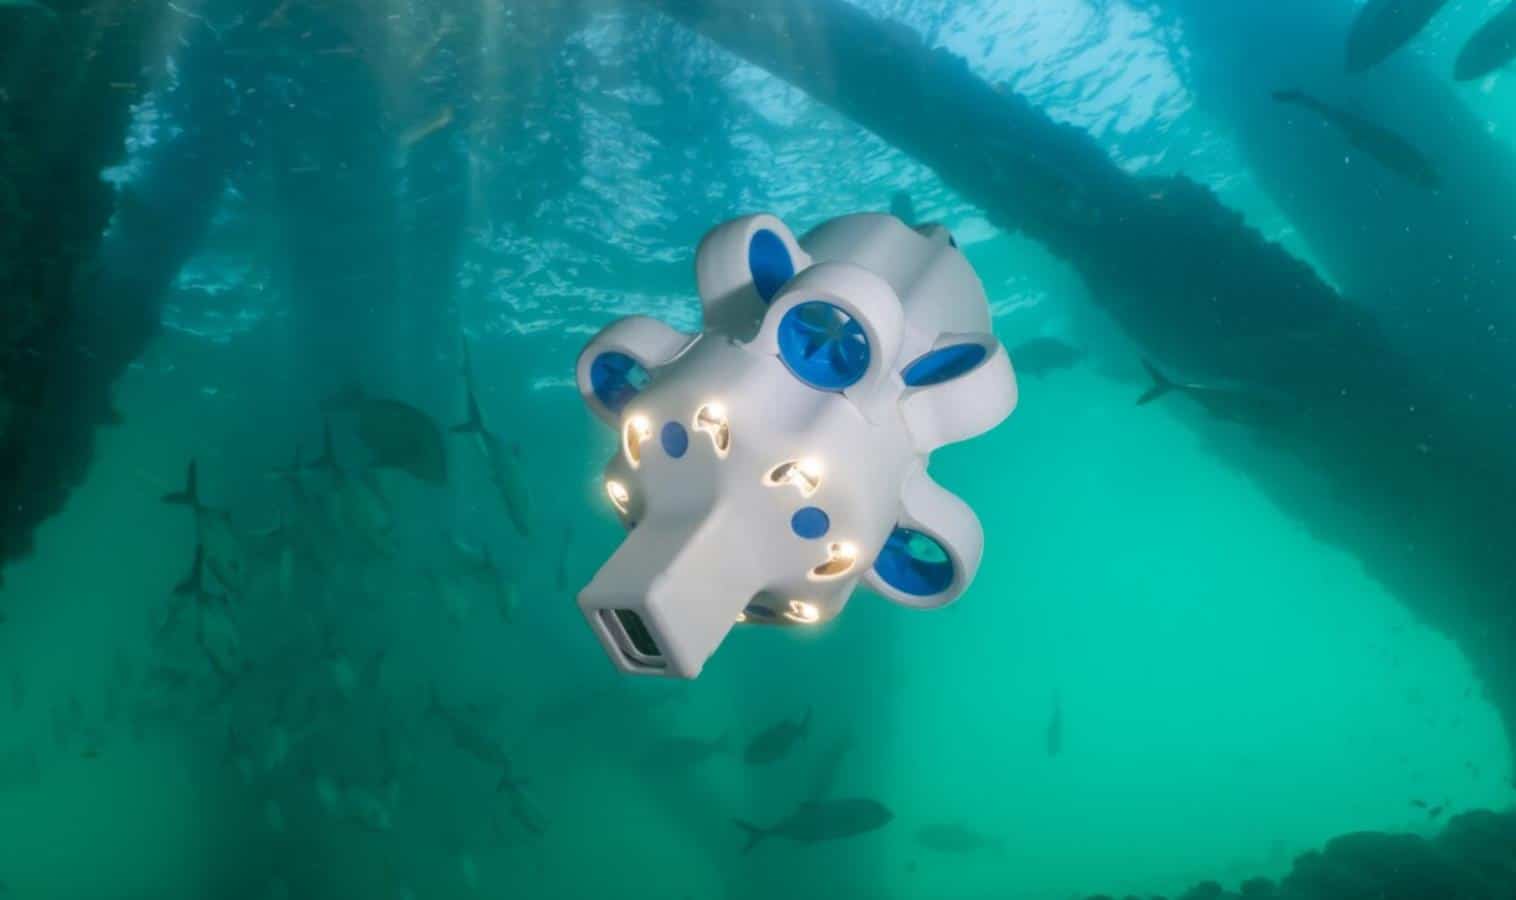 The Hydrus underwater drone is said to revolutionize ocean exploration